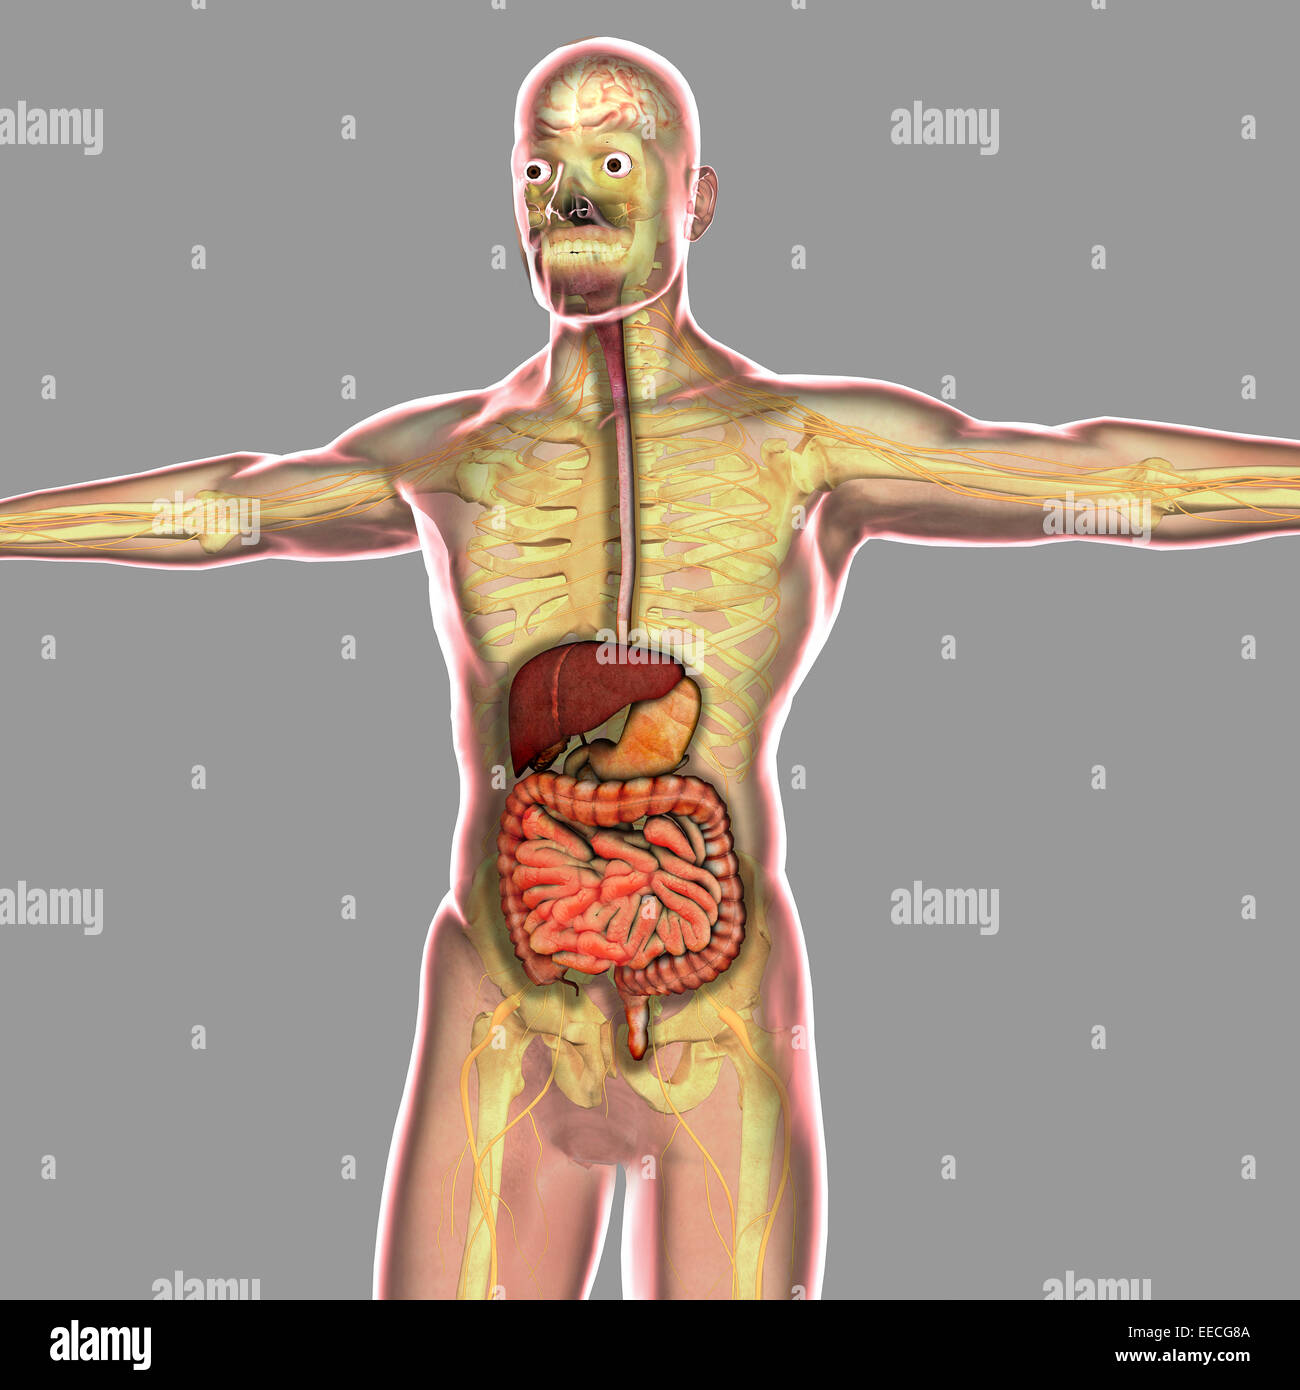 Human digestive system. Stock Photo